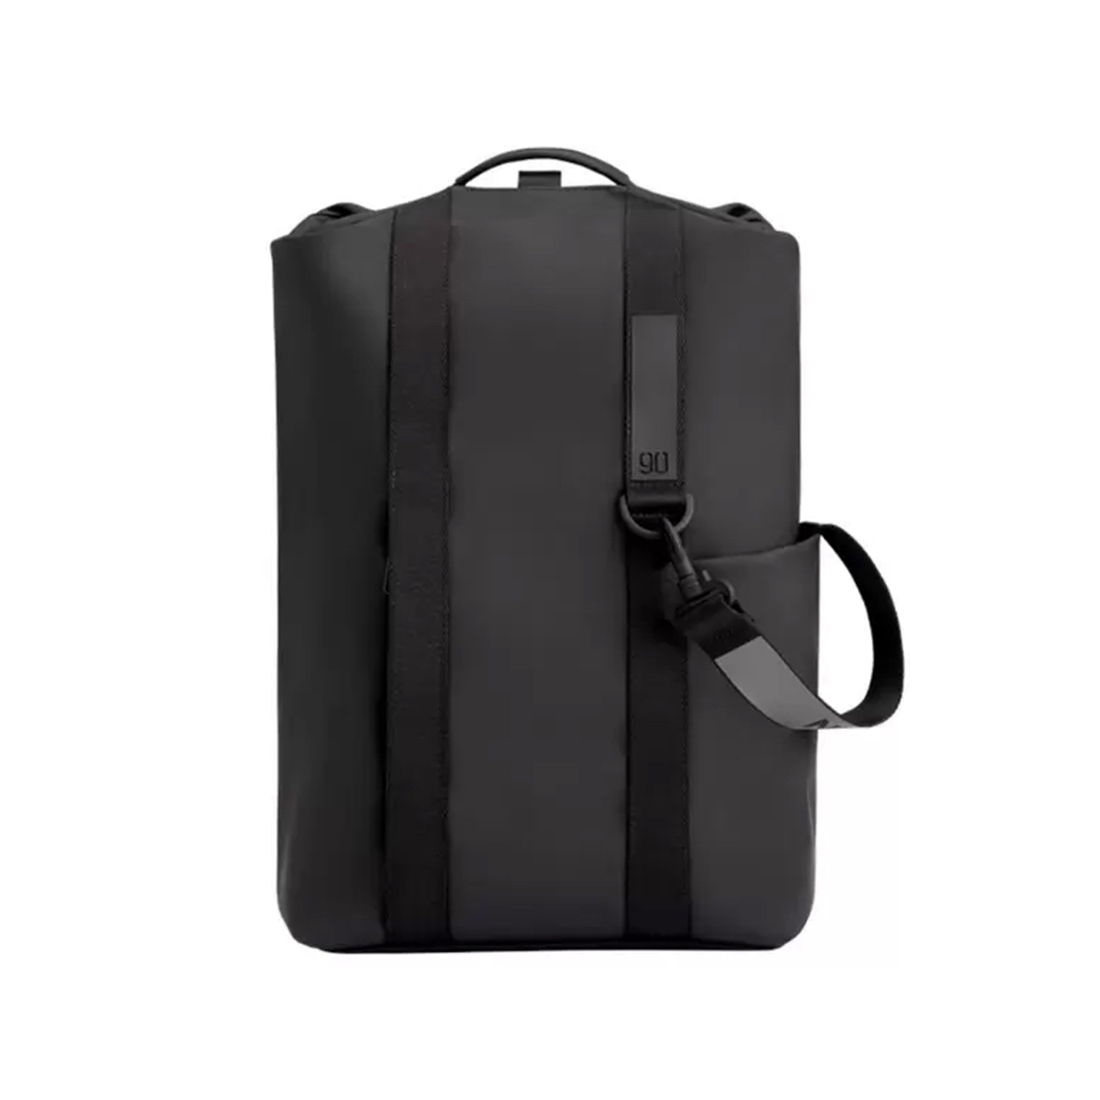 Рюкзак NINETYGO Urban Eusing backpack Черный